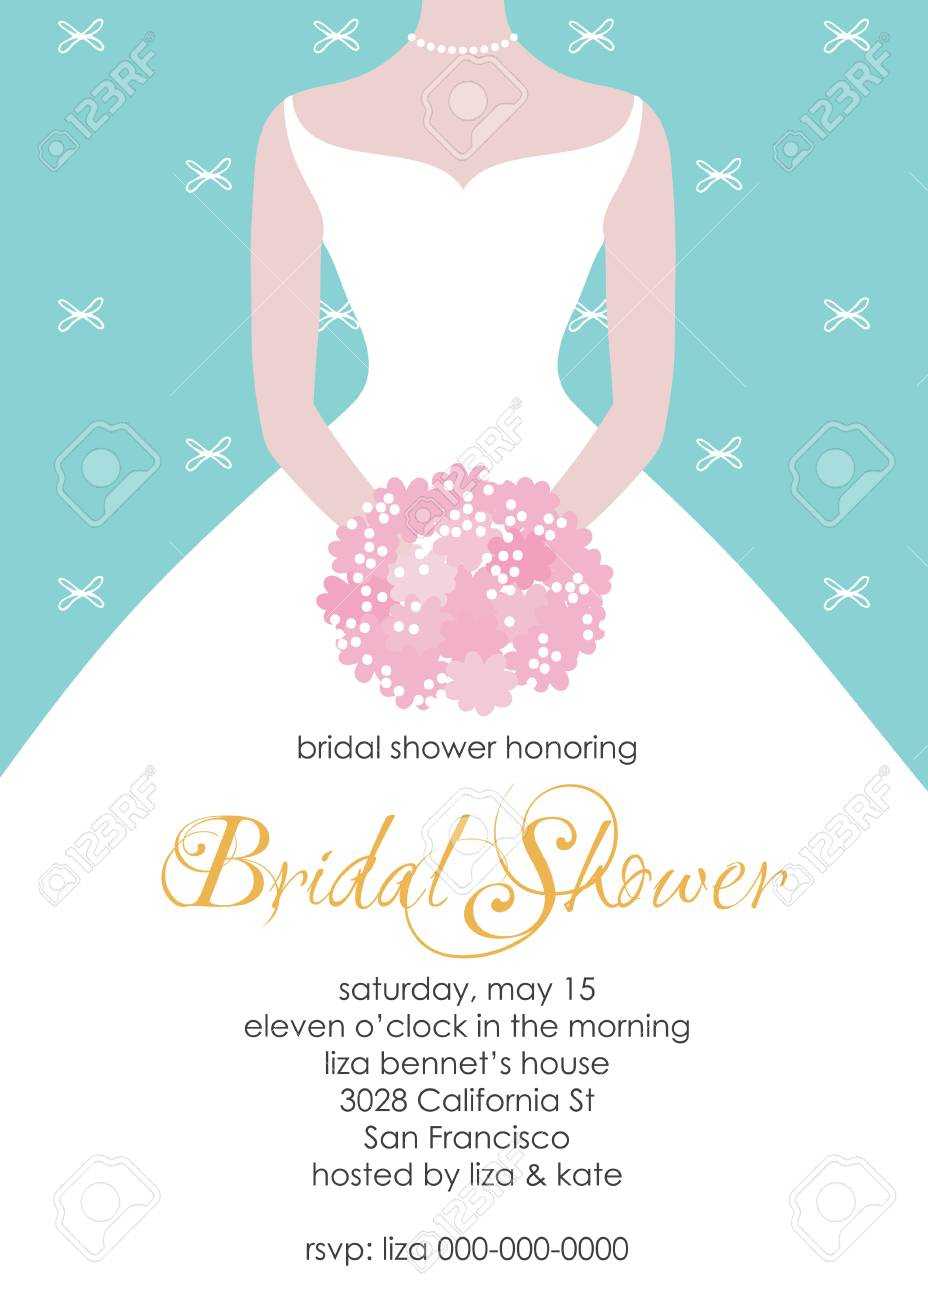 Bridal Shower Invitation Template. Wedding Fashion Vector Illustrartion Throughout Blank Bridal Shower Invitations Templates